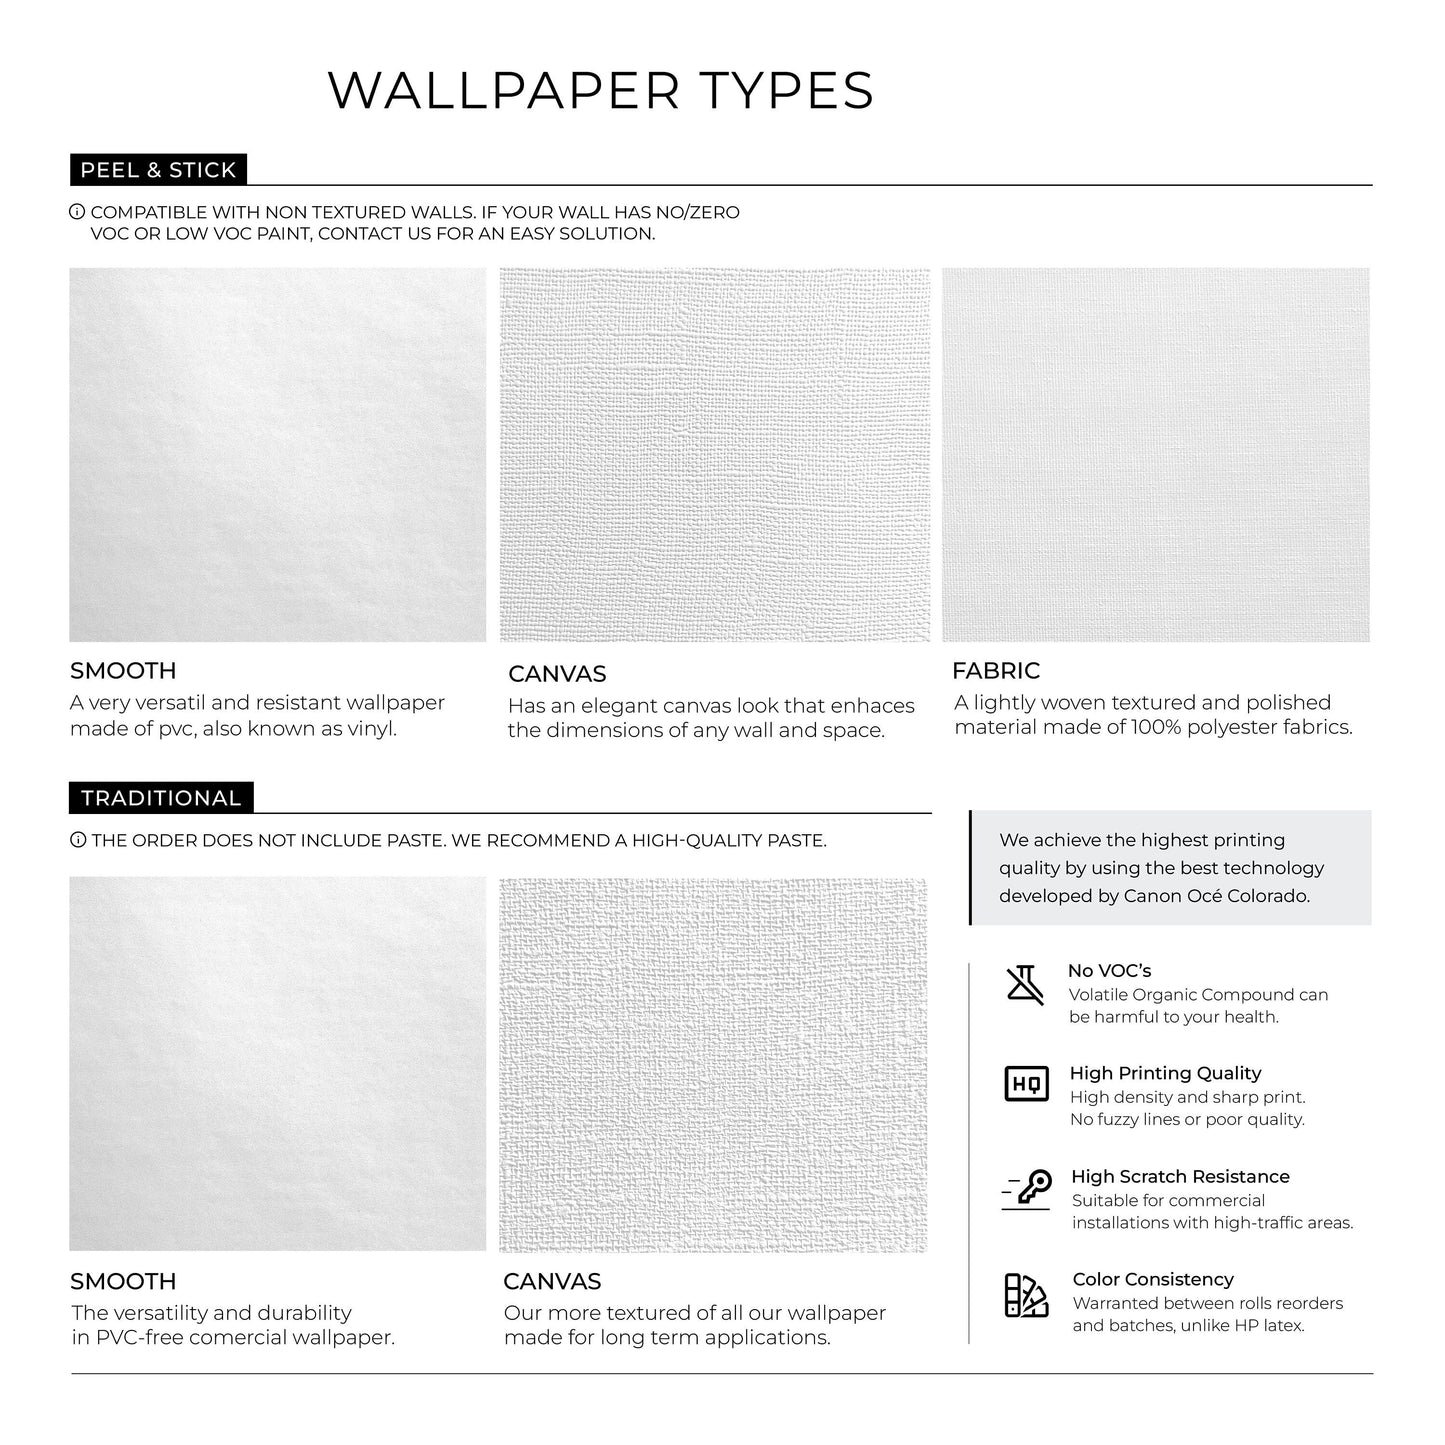 Tan Geometric Wallpaper / Peel and Stick Wallpaper Removable Wallpaper Home Decor Wall Art Wall Decor Room Decor - D327